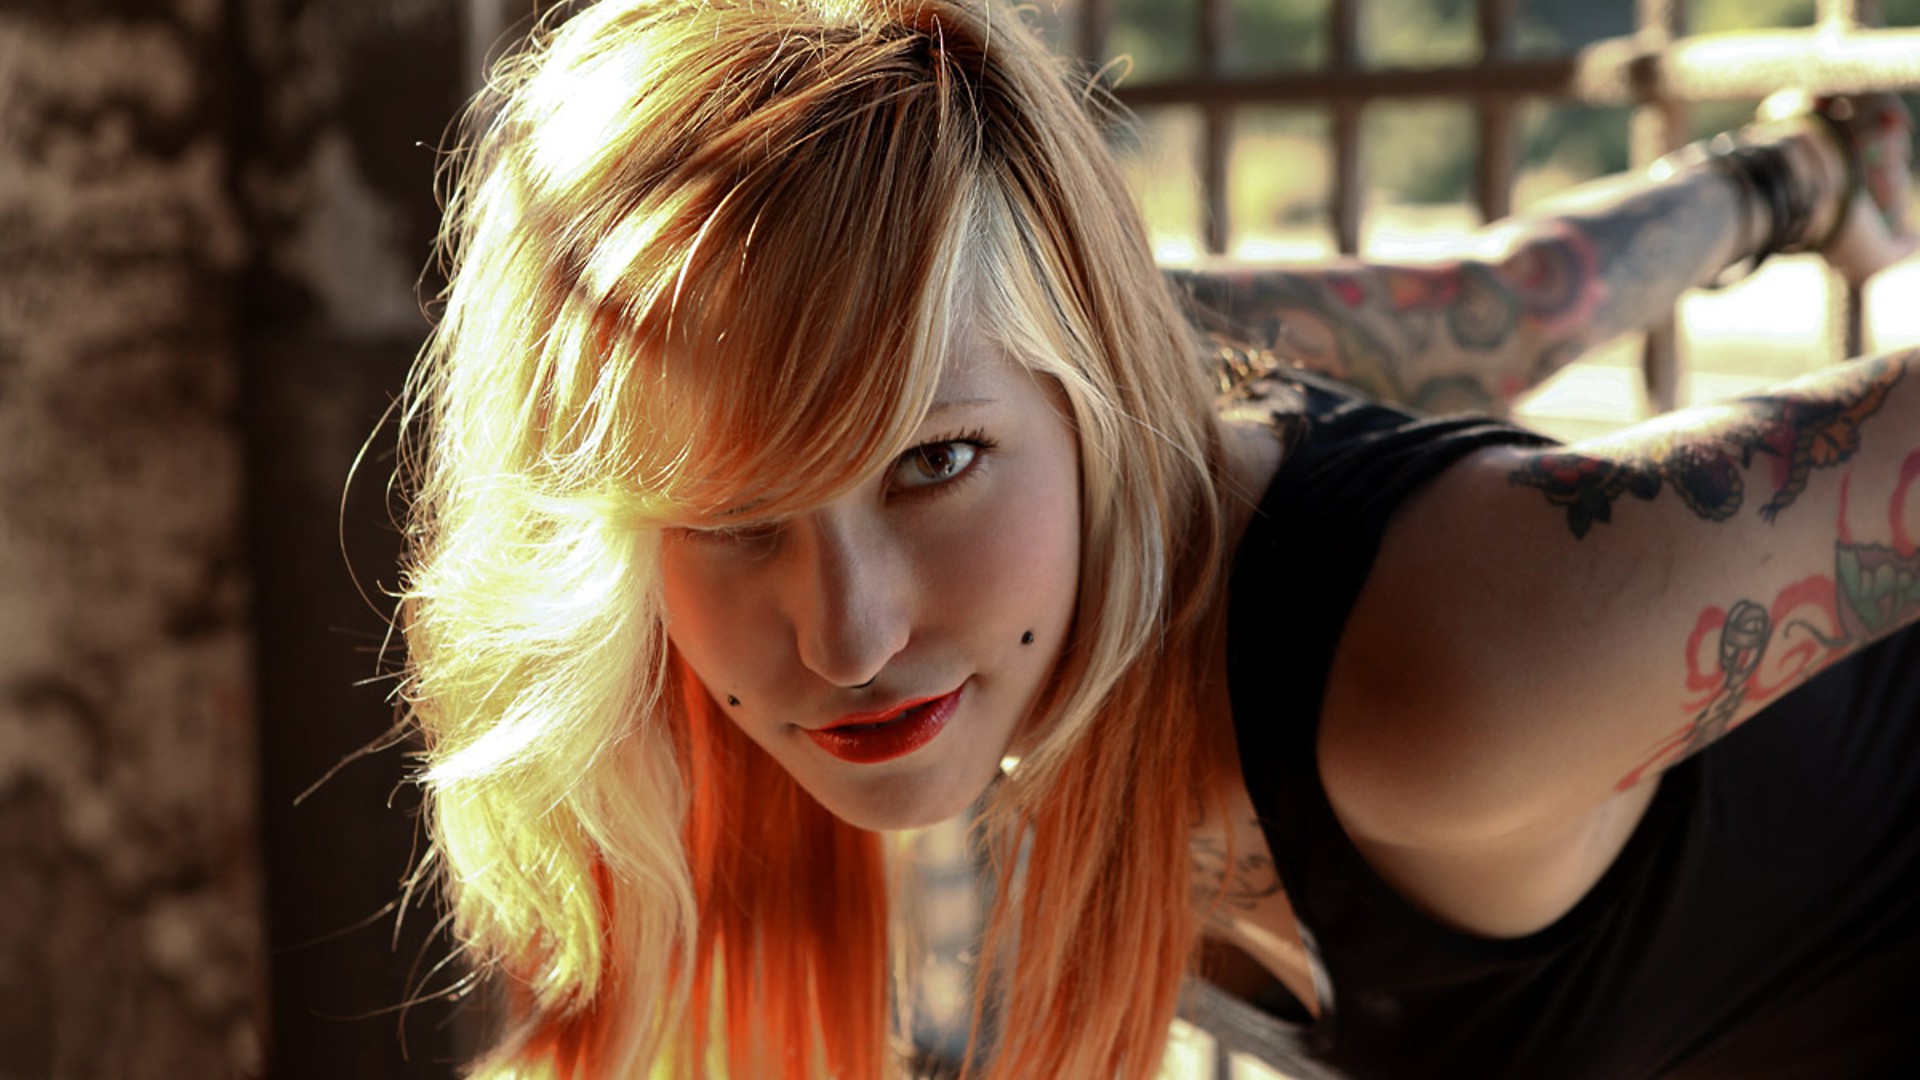 Suicide Girls Blonde Piercing Tattoo Brown Eyes Jane Doe Images, Photos, Reviews